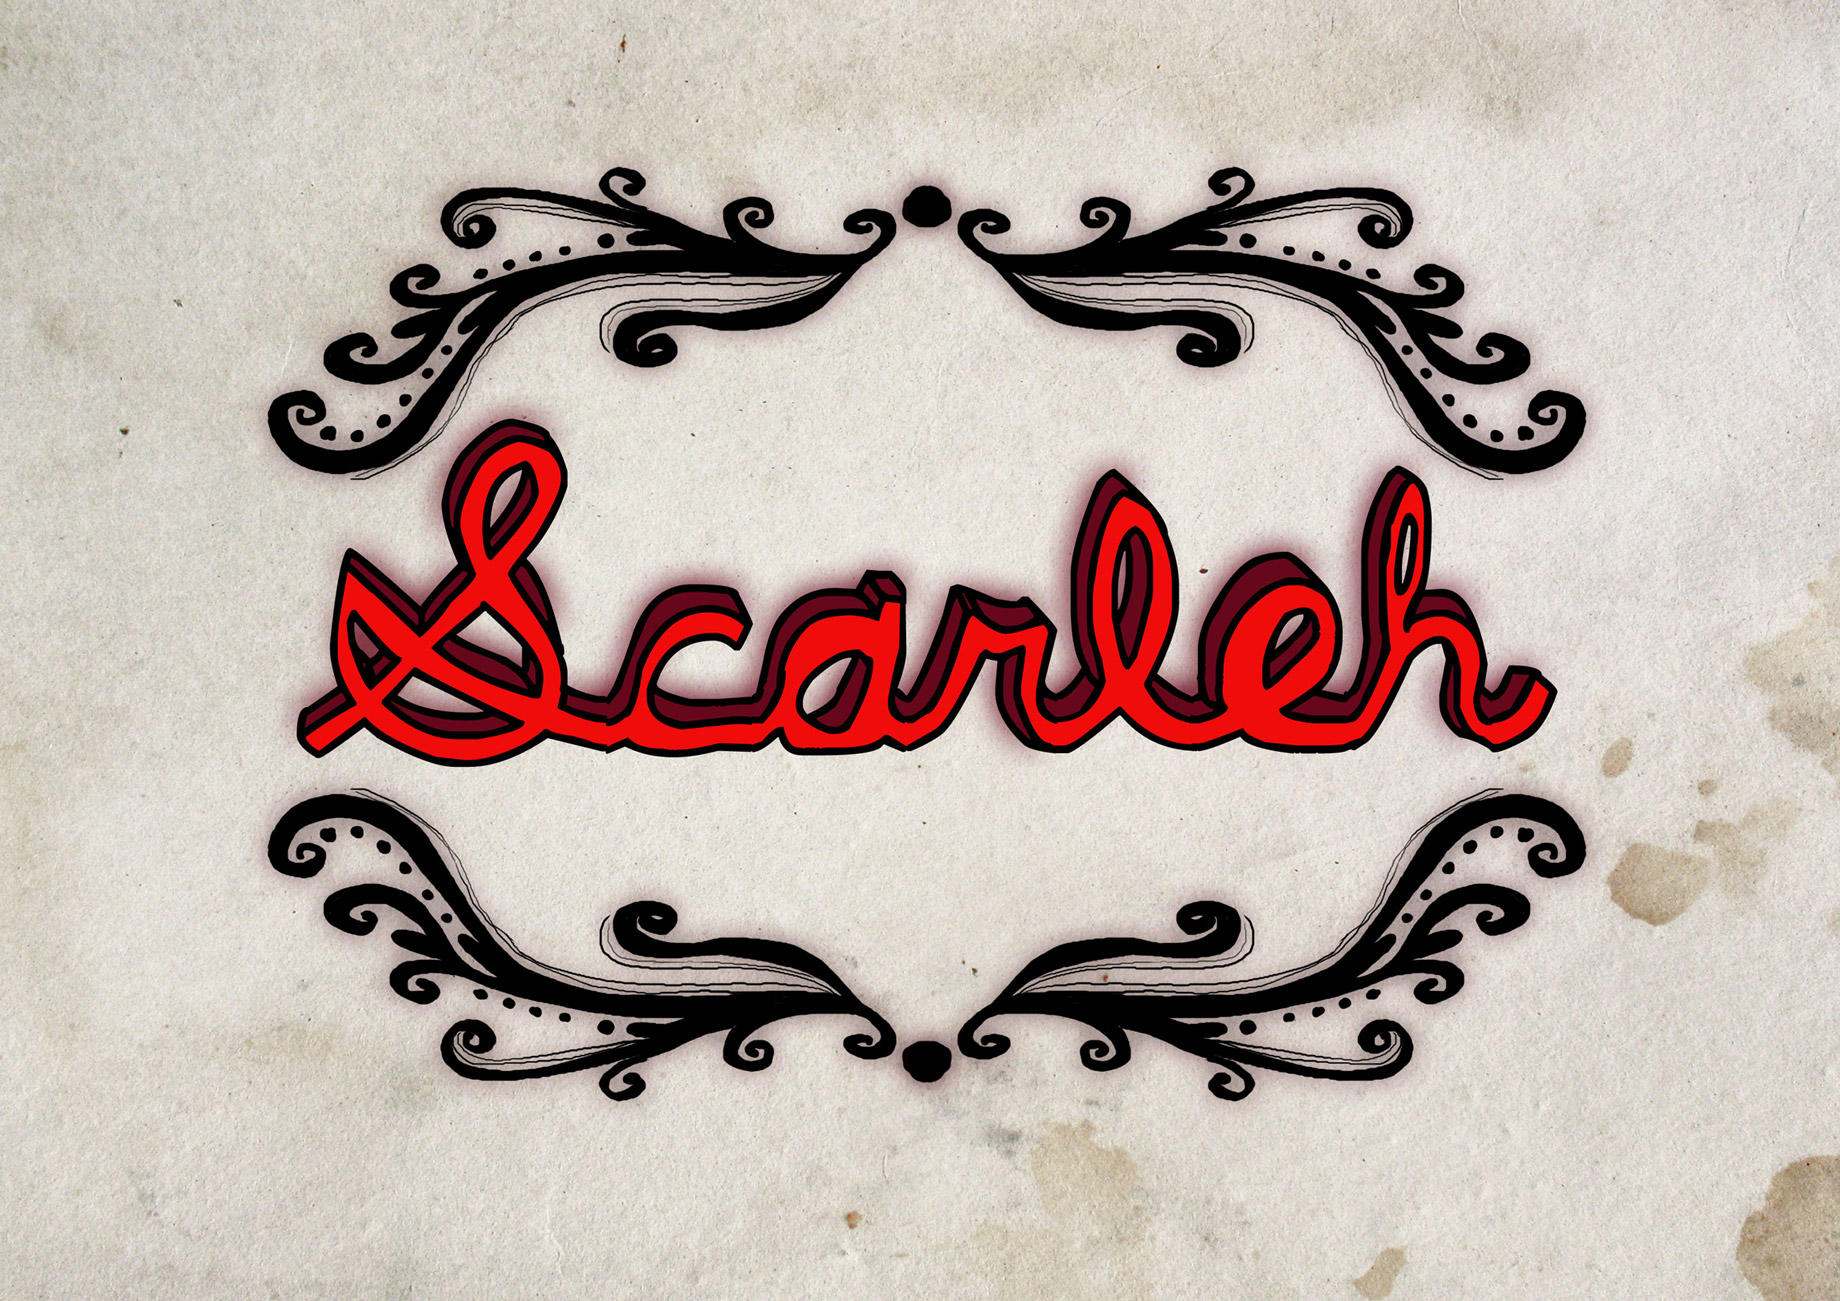 Scarleh logo design